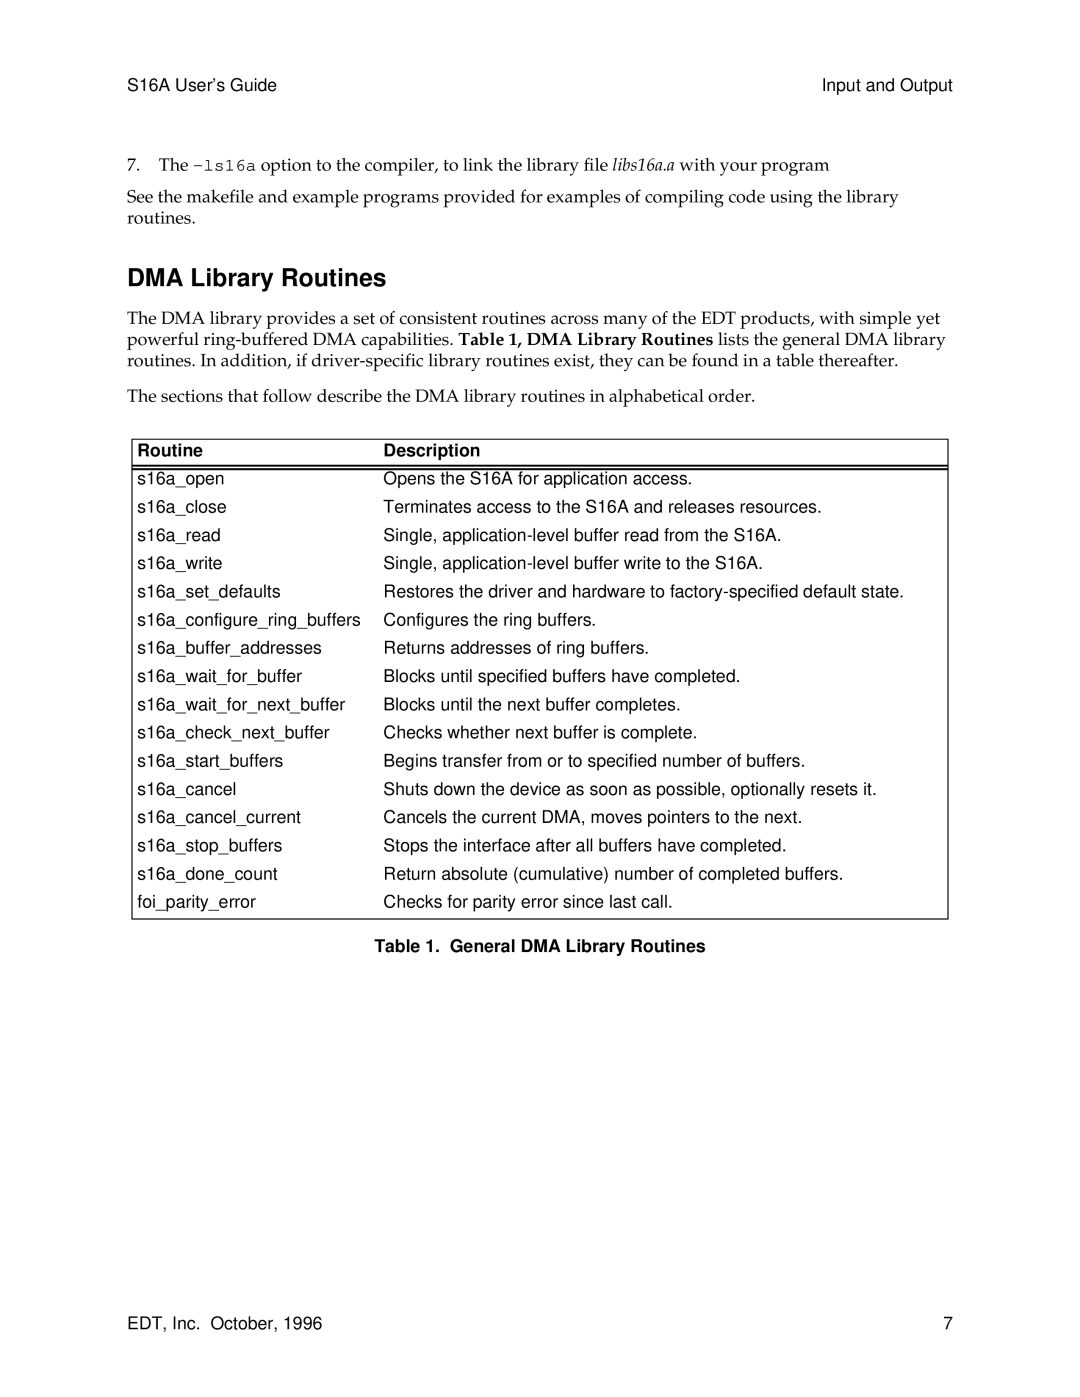 Sun Microsystems S16A manual Description, General DMA Library Routines 